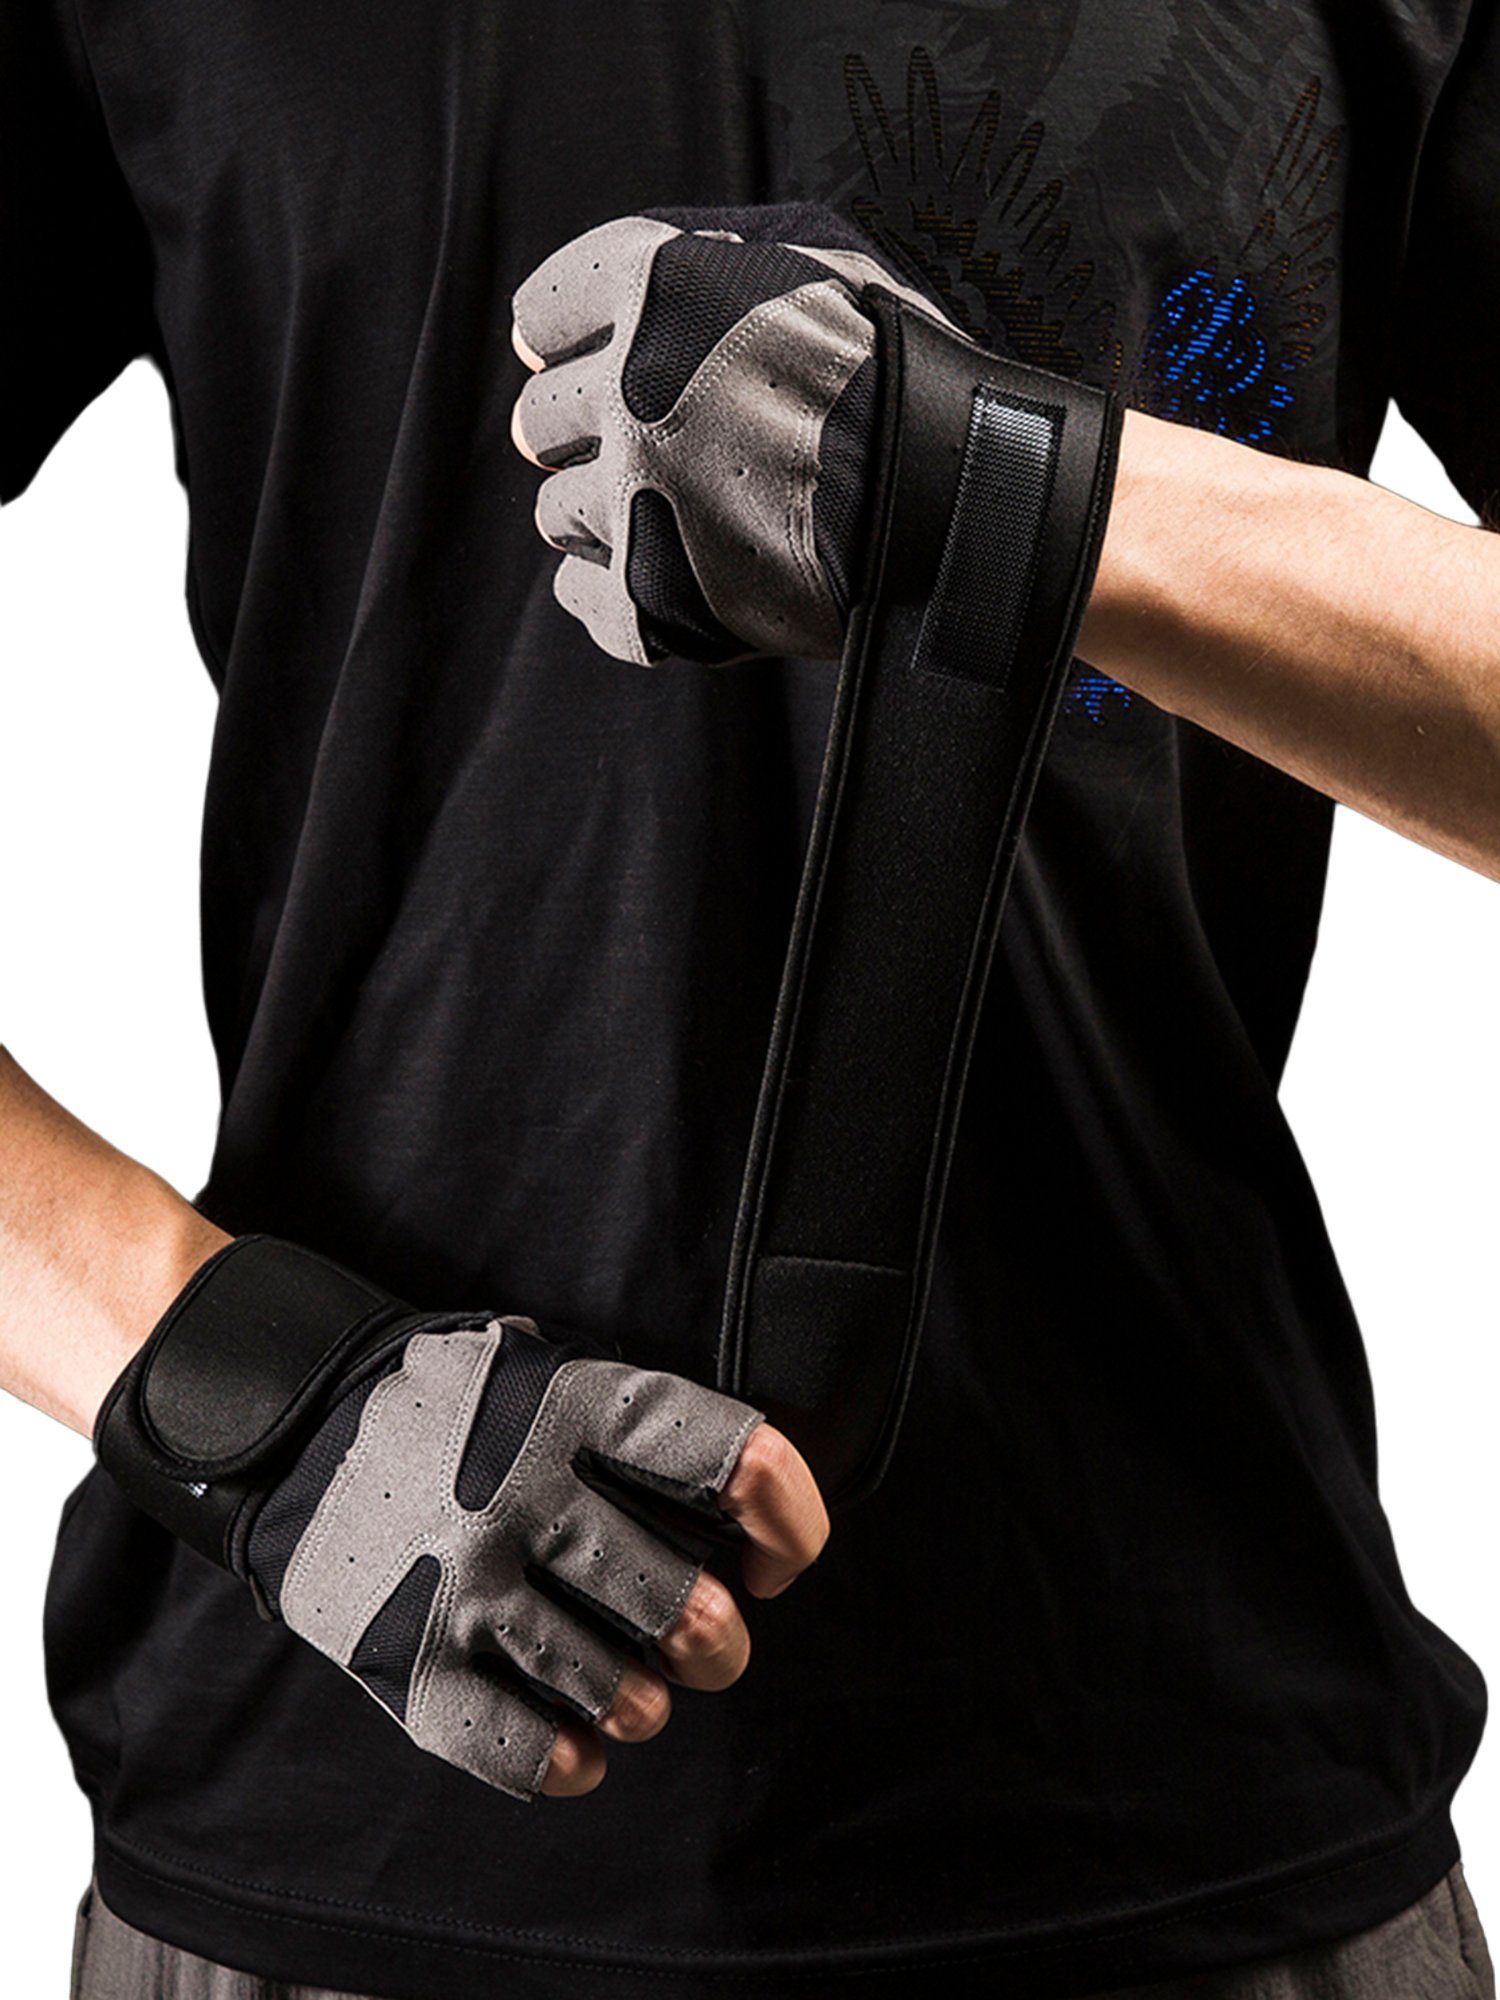 LAPA HOME Multisporthandschuhe Handgelenk-Verstellband Herren Halbfinger verlängertes Fitness rutschfeste Schwarz Fahrradhandschuhe Atmungsaktives, Damen